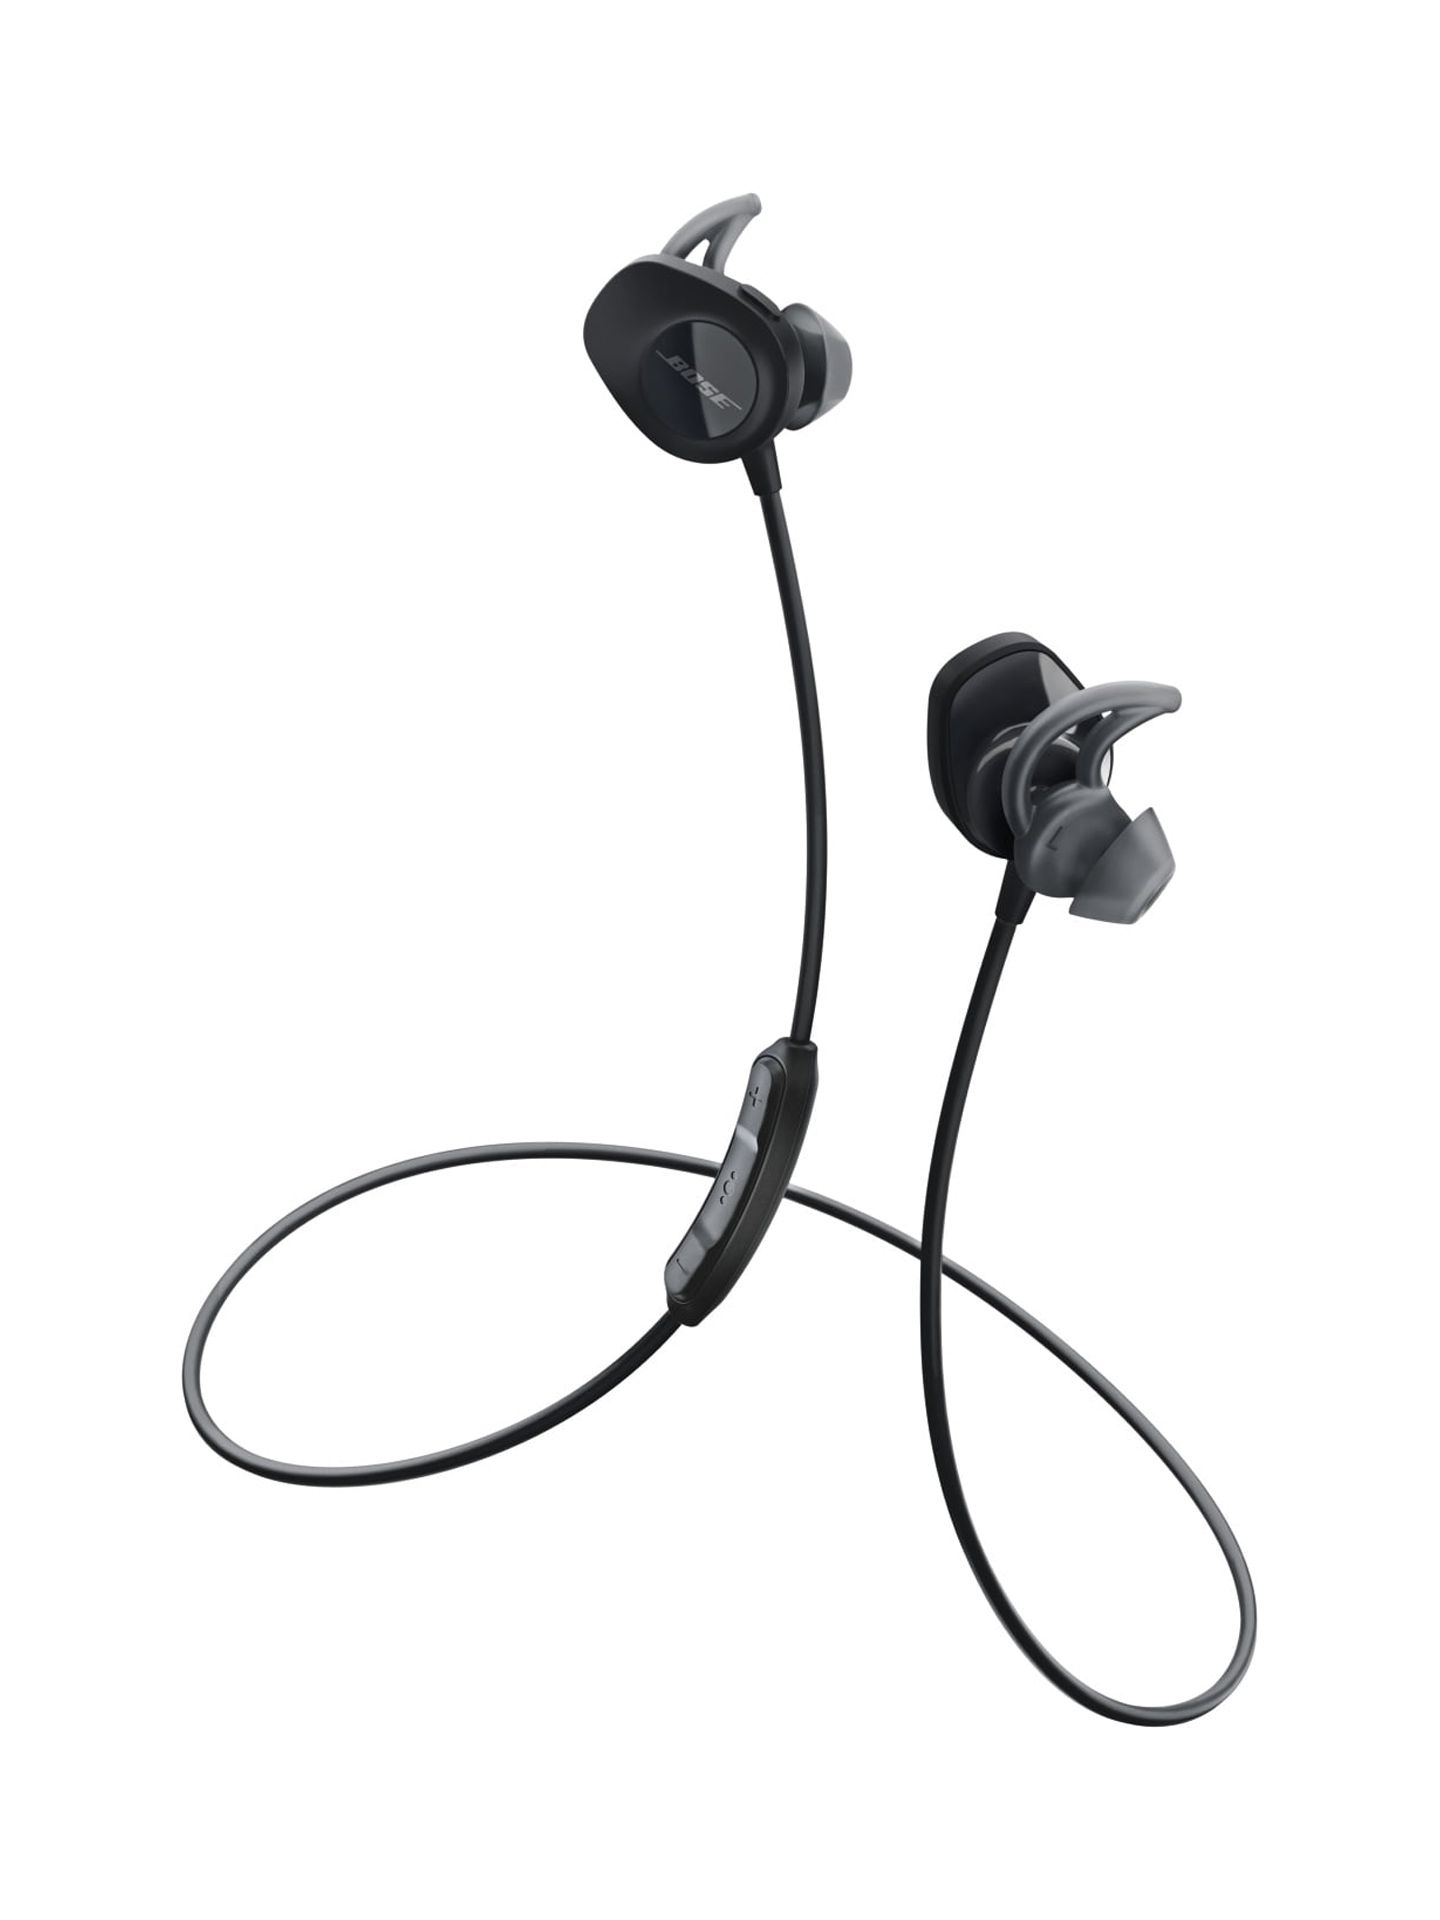 Bose SoundSport Wireless Sports Bluetooth Earbuds, Black - image 4 of 11